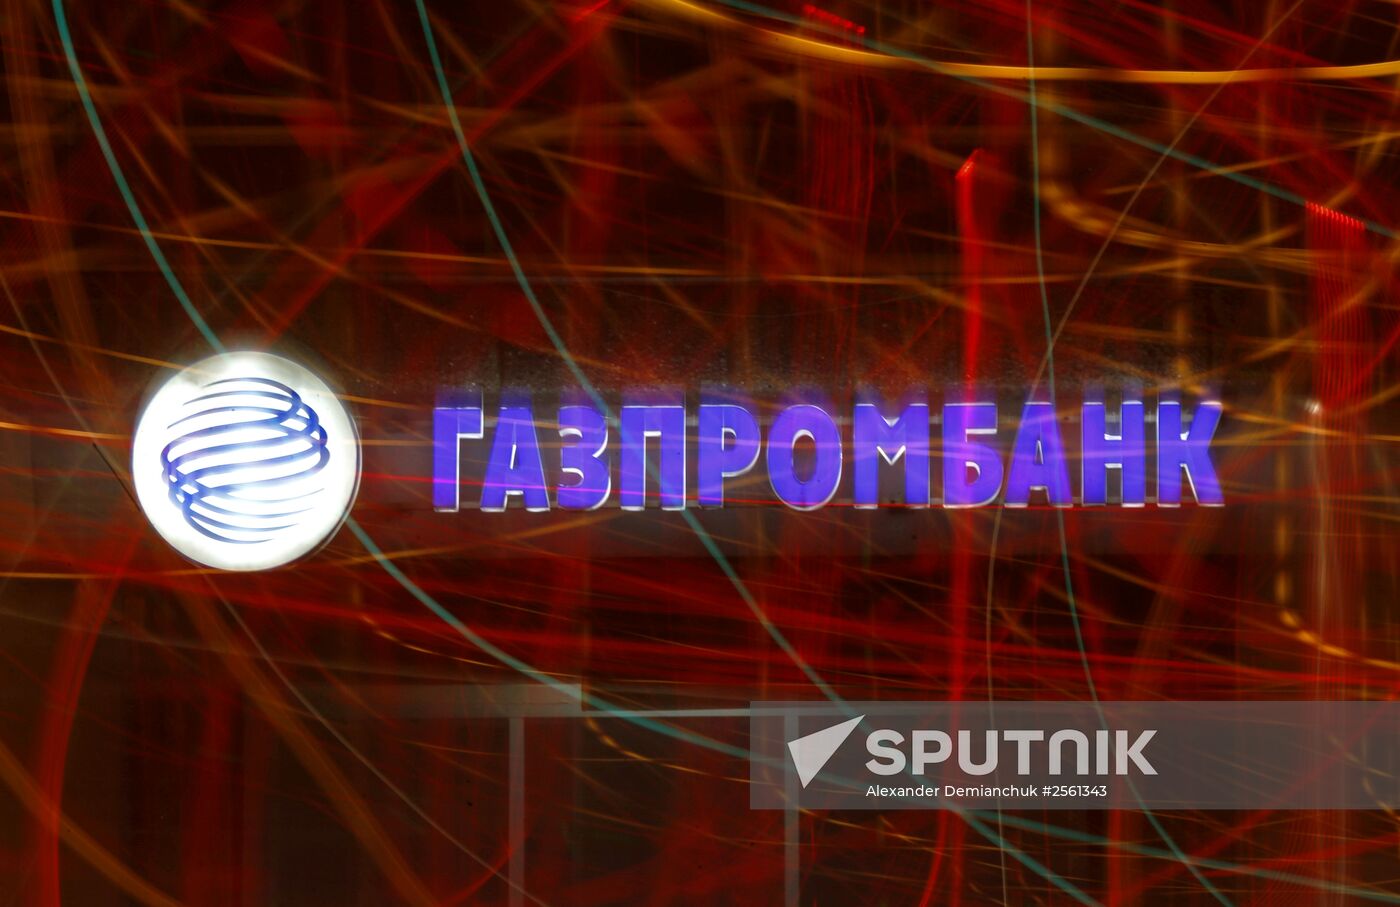 Gazprombank's logo